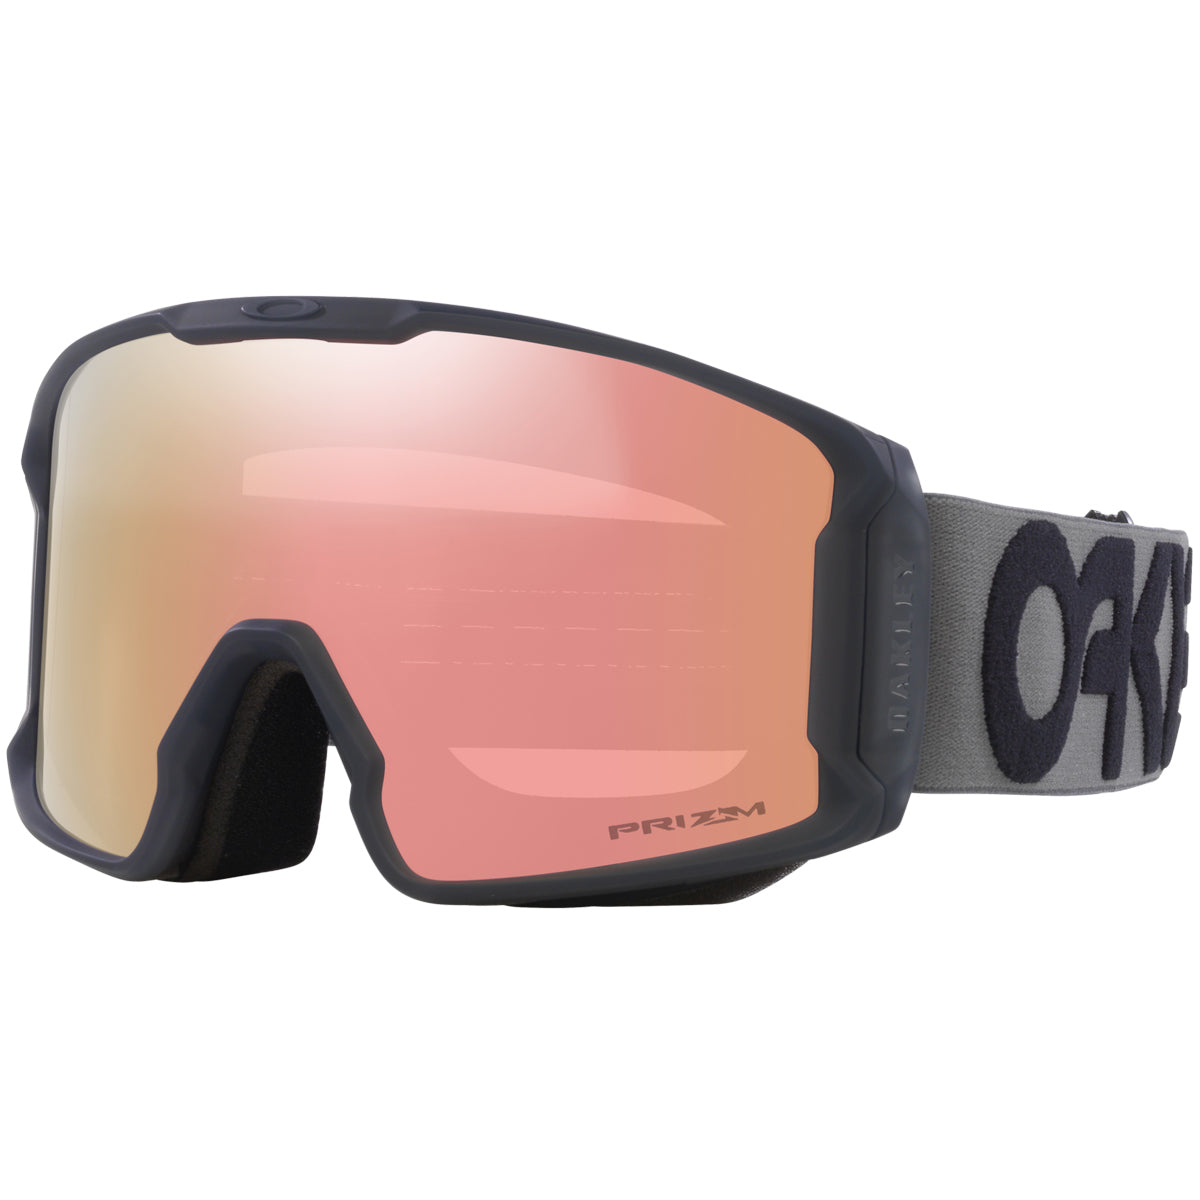 Oakley Line Miner Snowboard Goggles - Matte Forged Iron/Prizm Rose Gold Iridium image 1